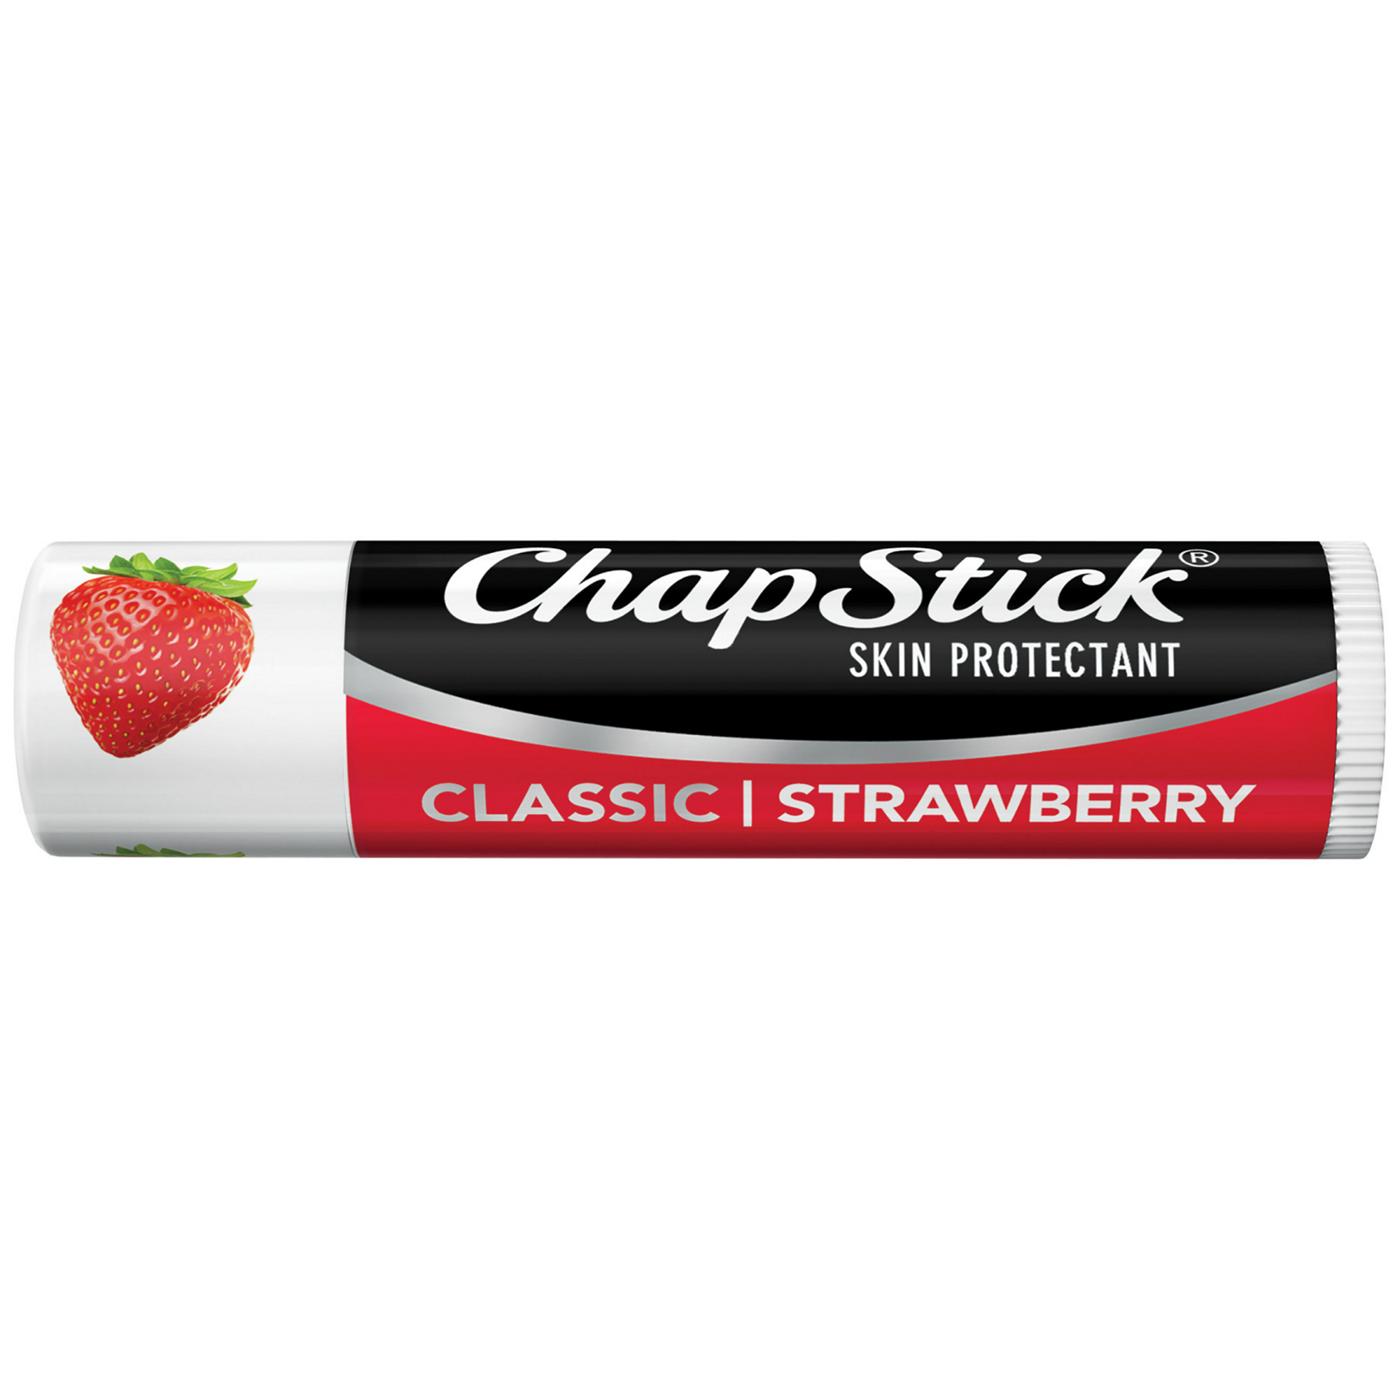 ChapStick Lip Balm Tube - Classic Strawberry; image 1 of 8